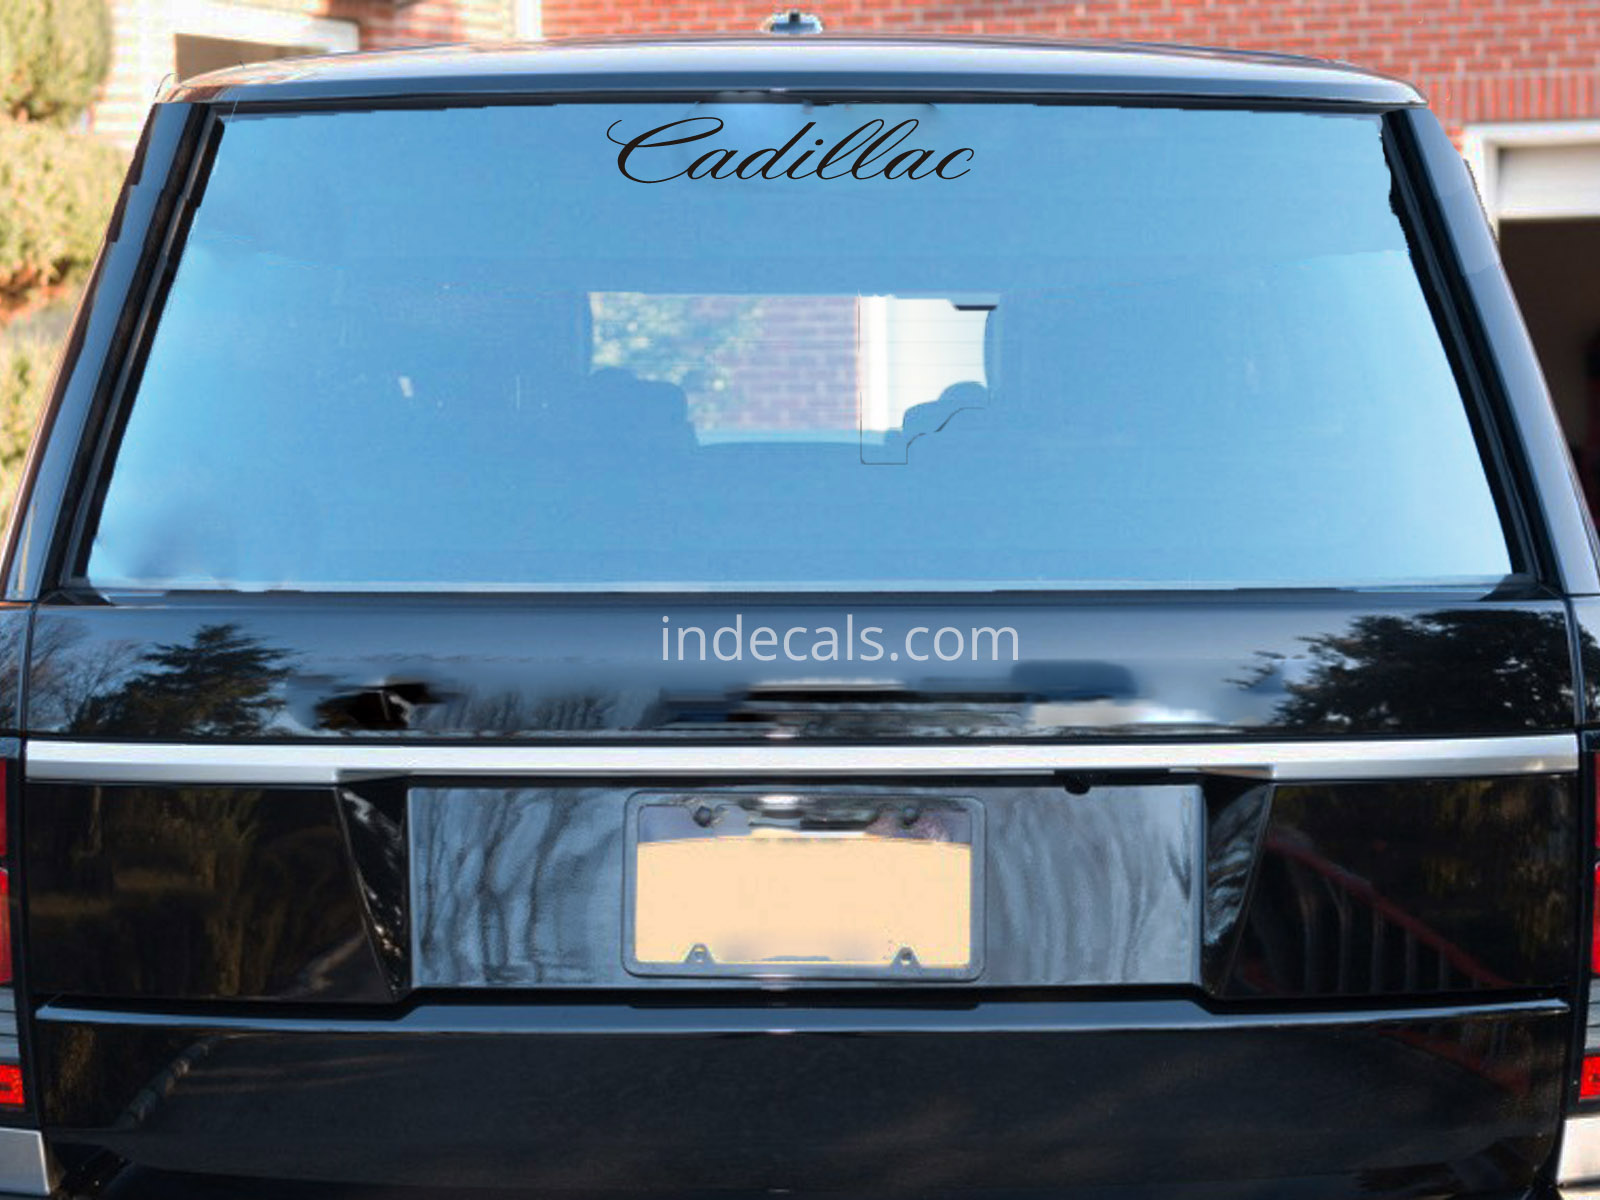 1 x Cadillac Sticker for Windshield or Back Window - Black